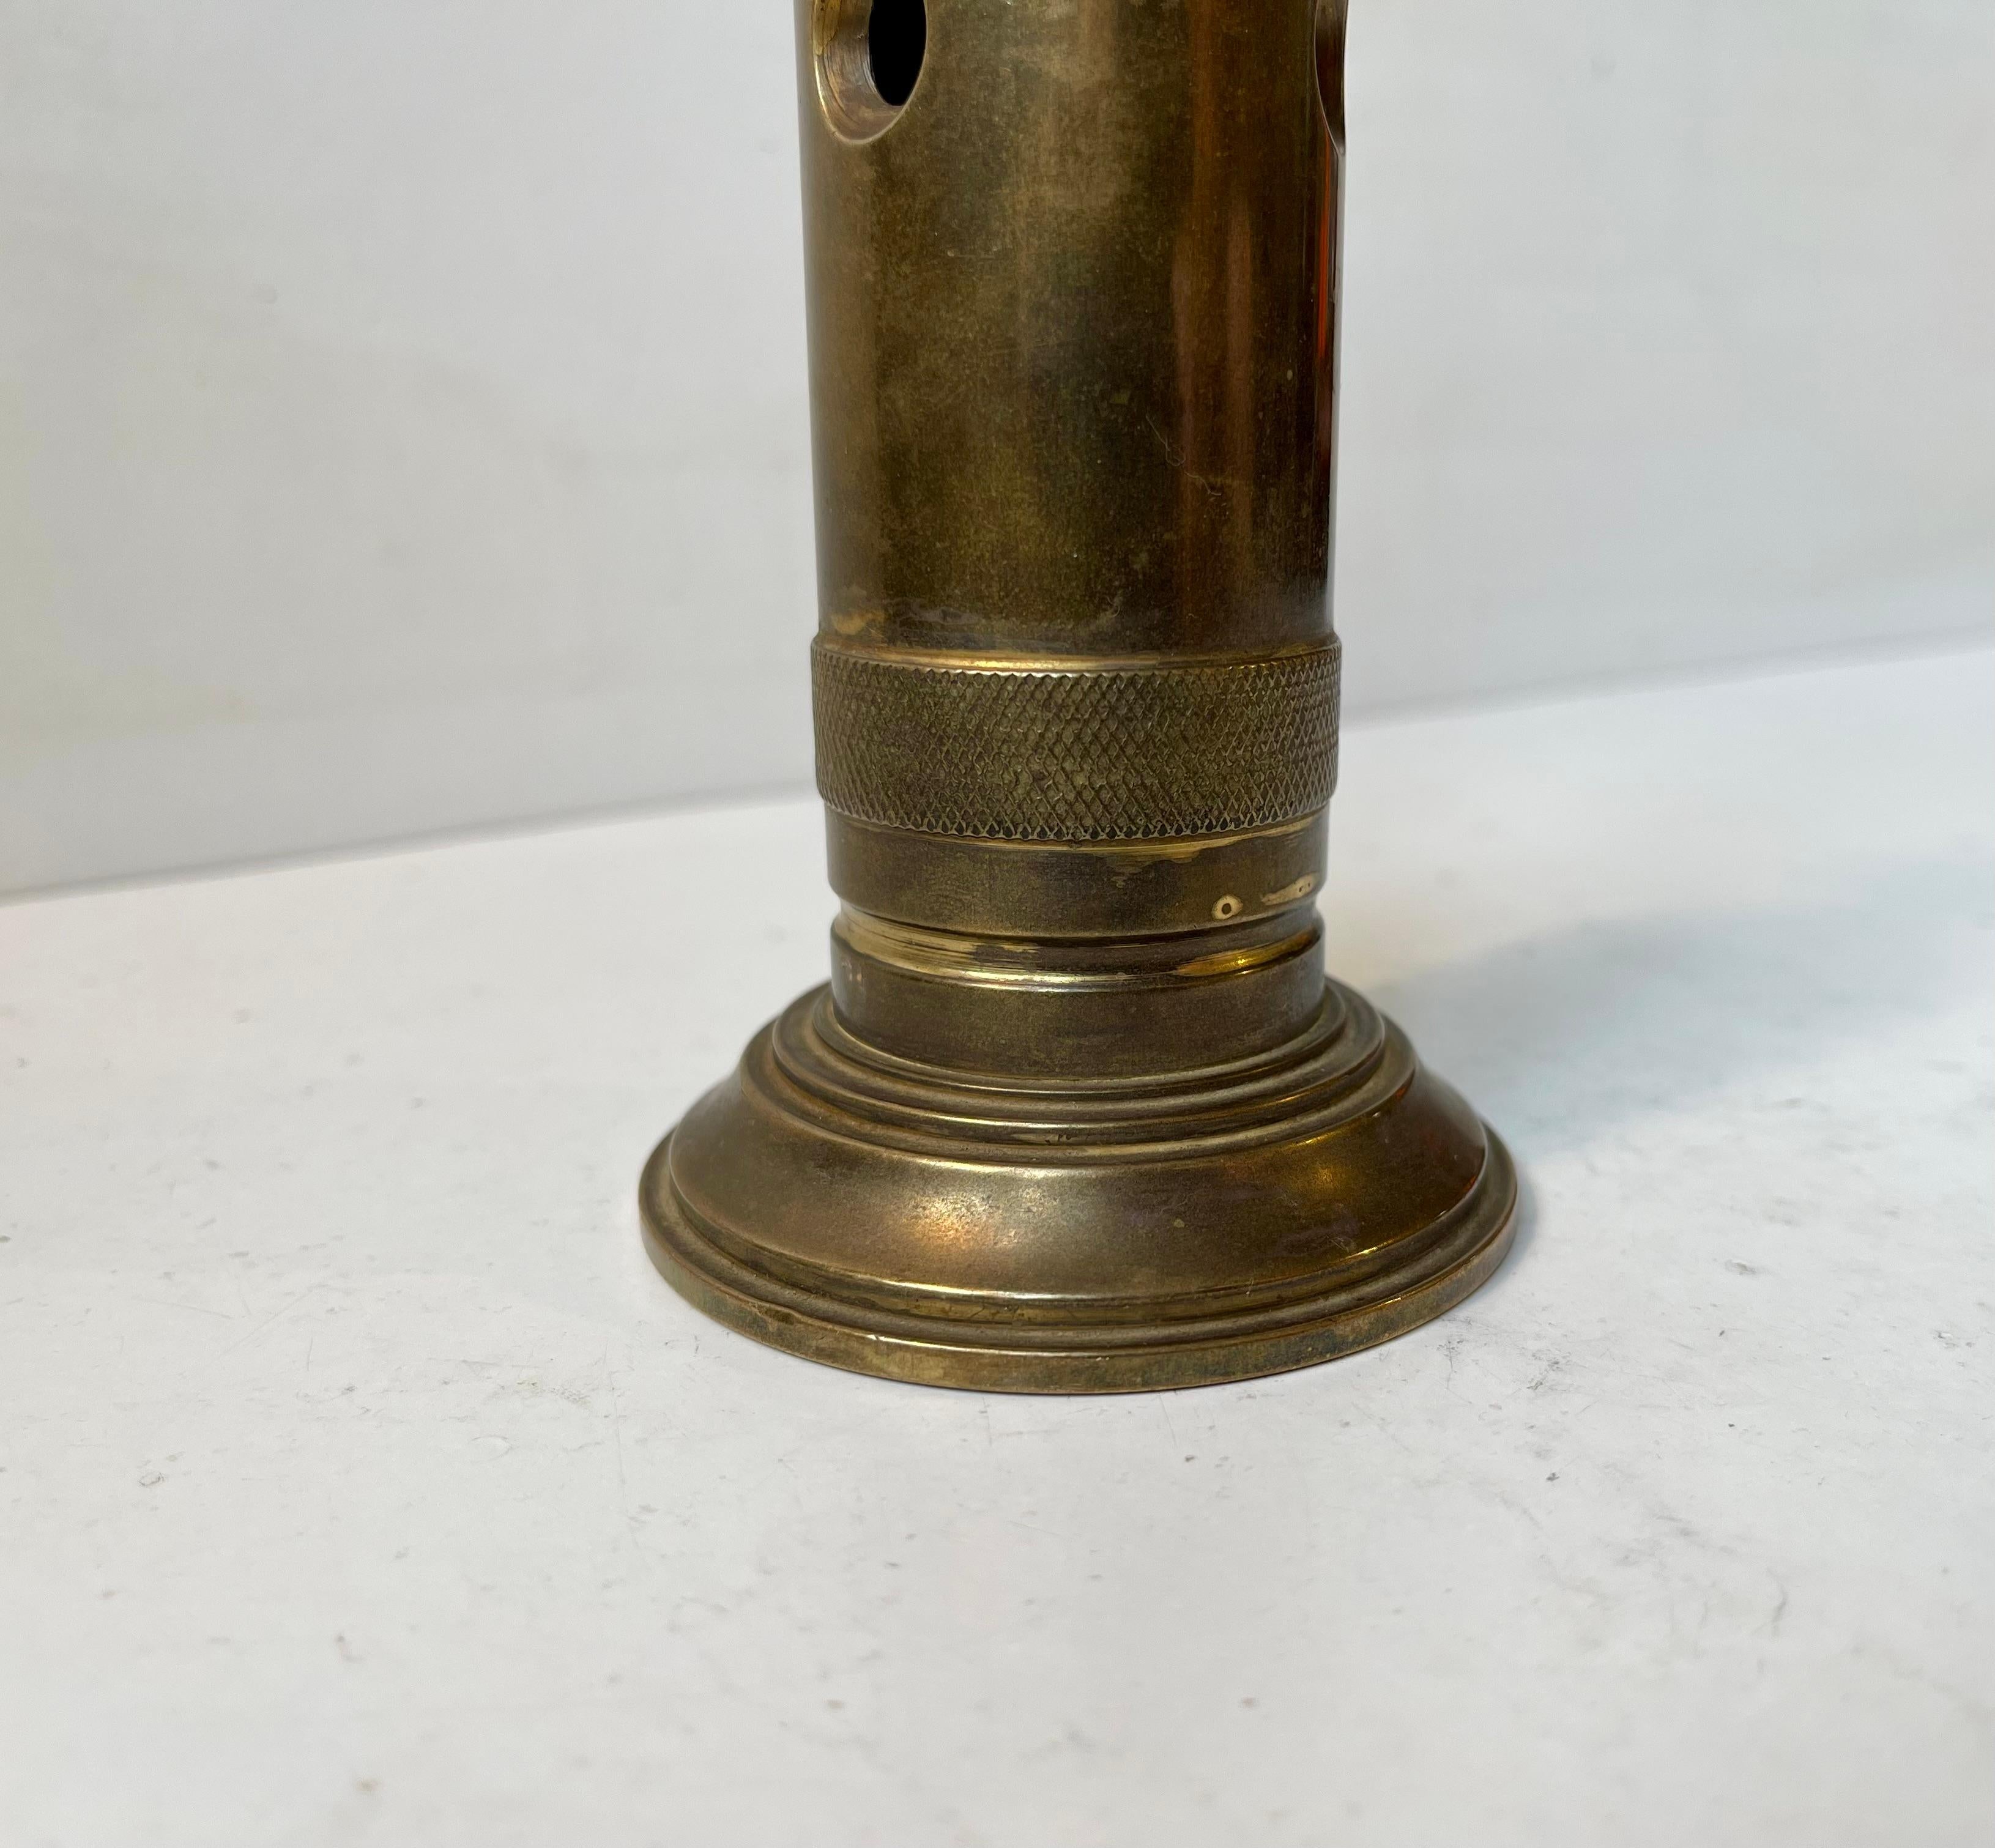 Scandinavian Vintage Nautical Steam Whistle Desk Cigar Cutter in Brass, 1930s